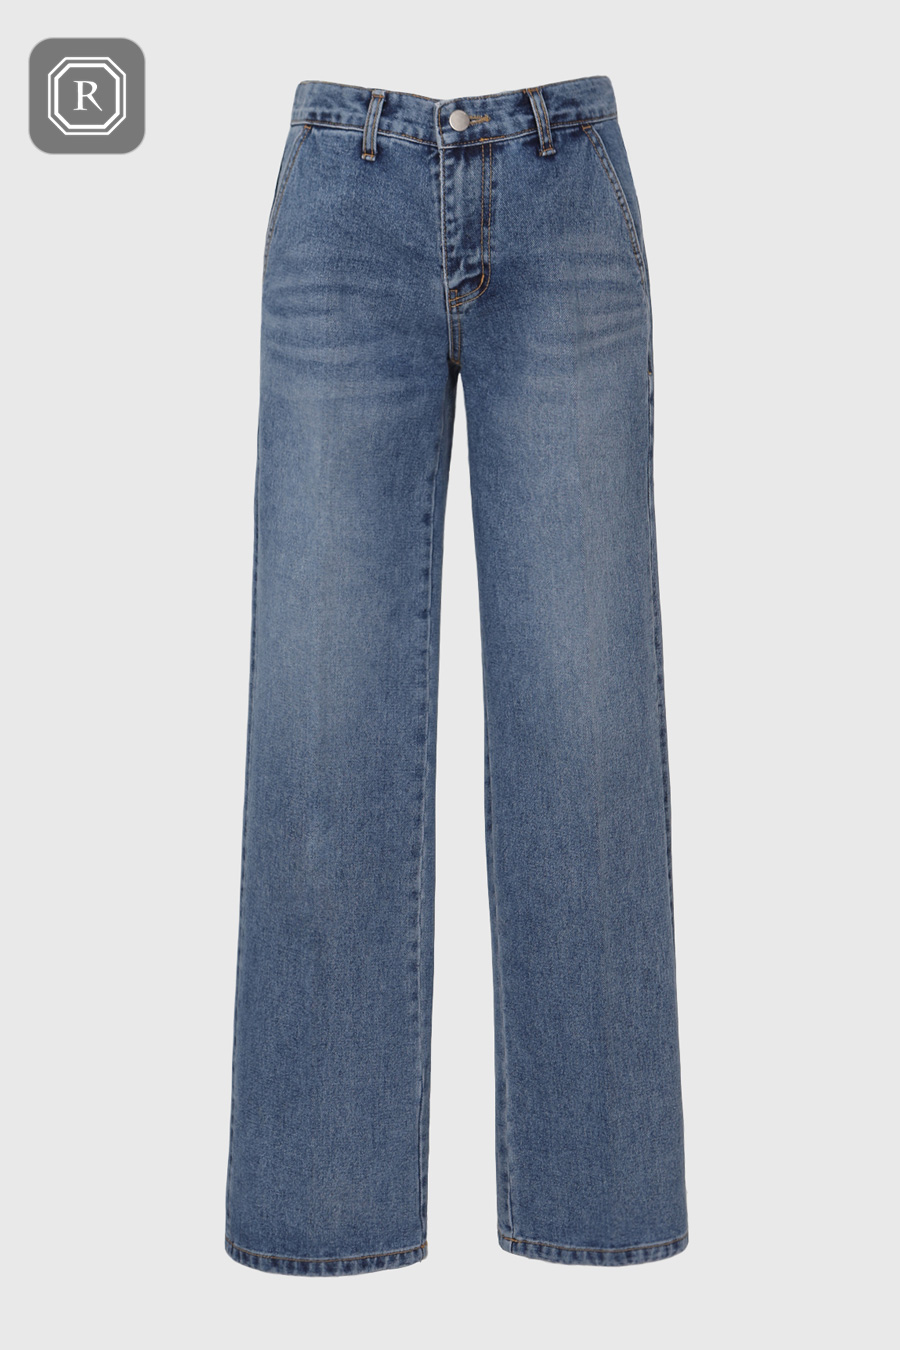 [RFSPT01BL] Retive wide leg jeans